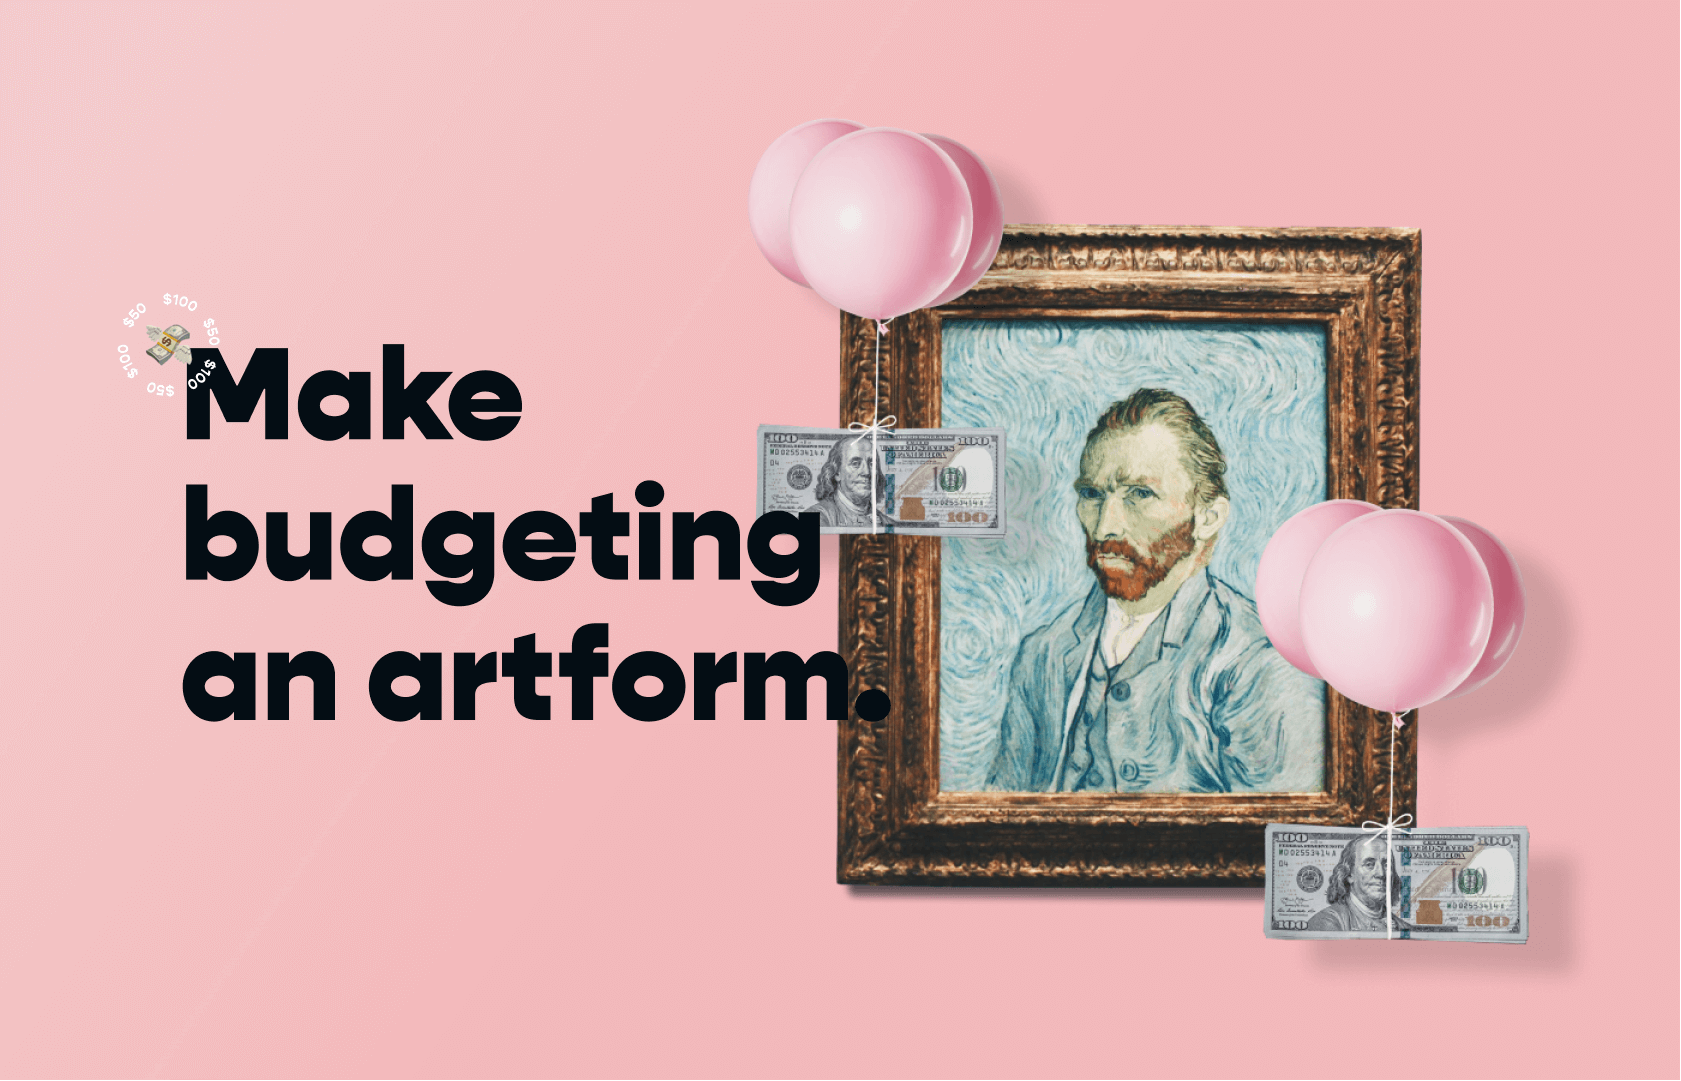 Make budgeting an artform